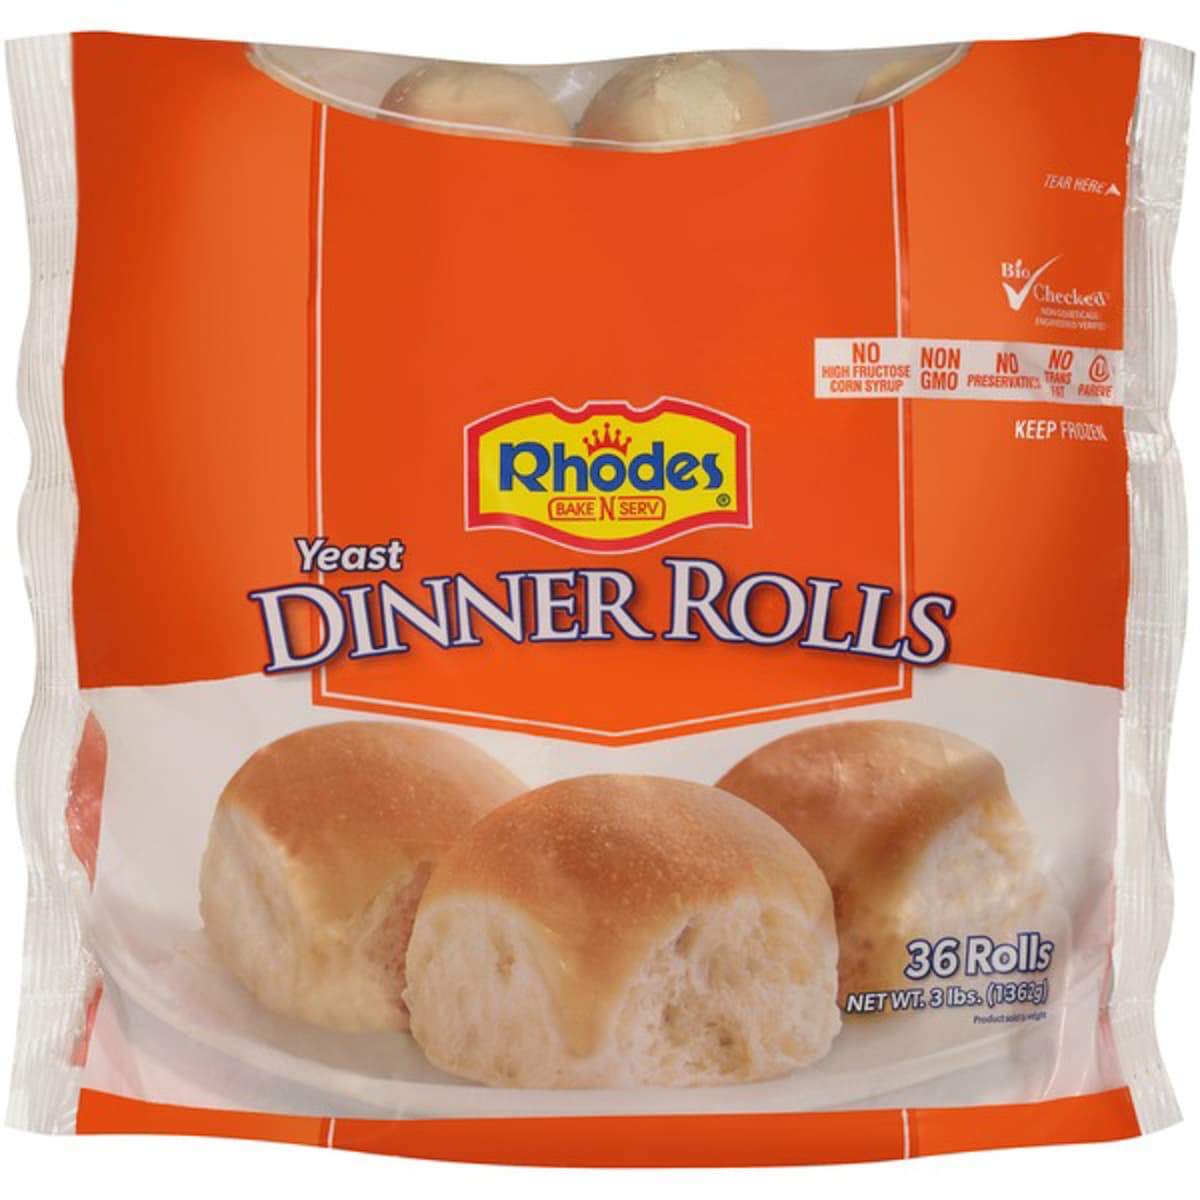 Package of Rhodes dinner rolls.